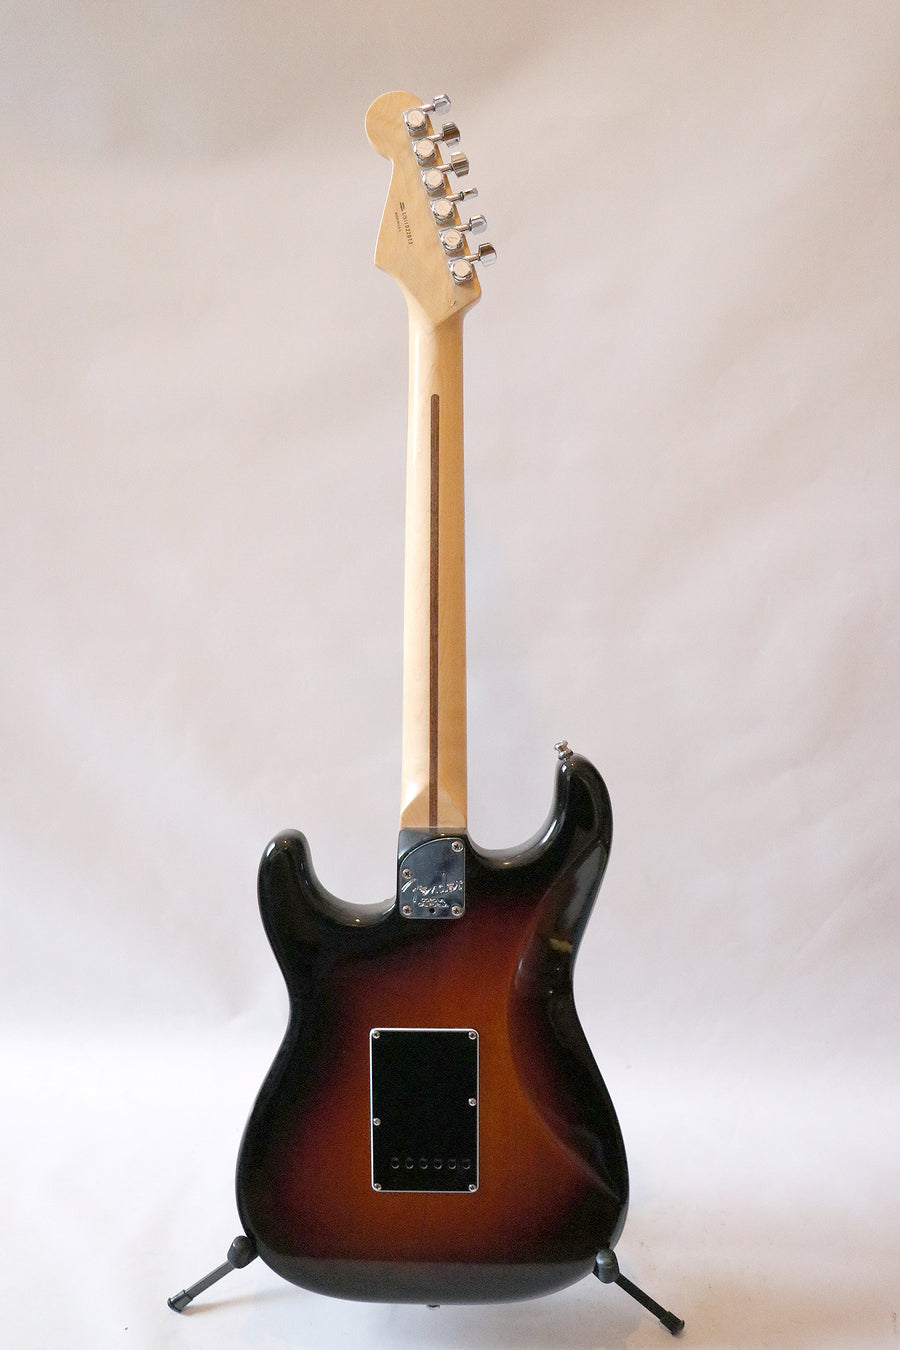 Fender American Deluxe Stratocaster 2011